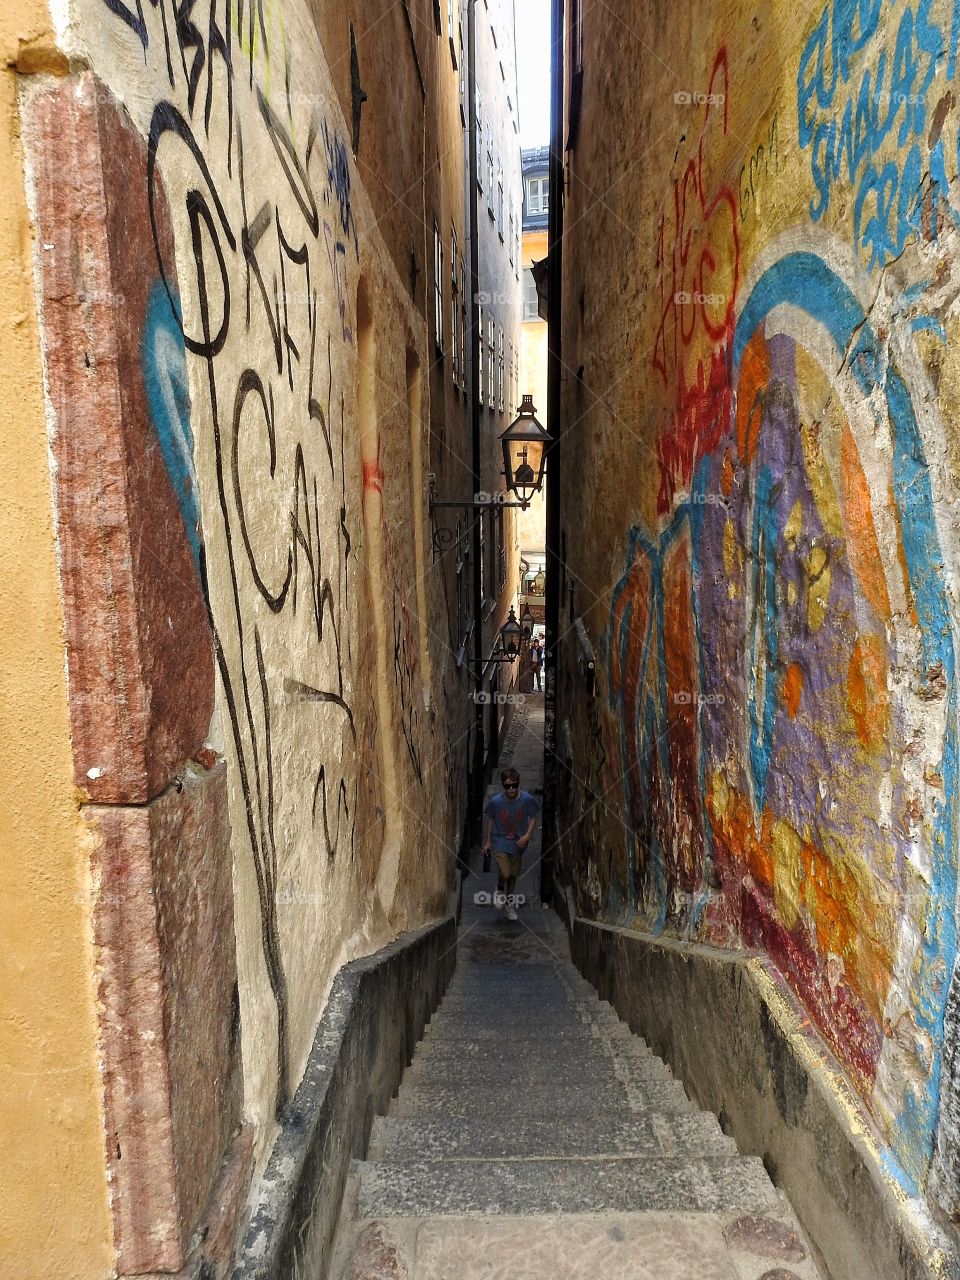 Narrow graffiti alley